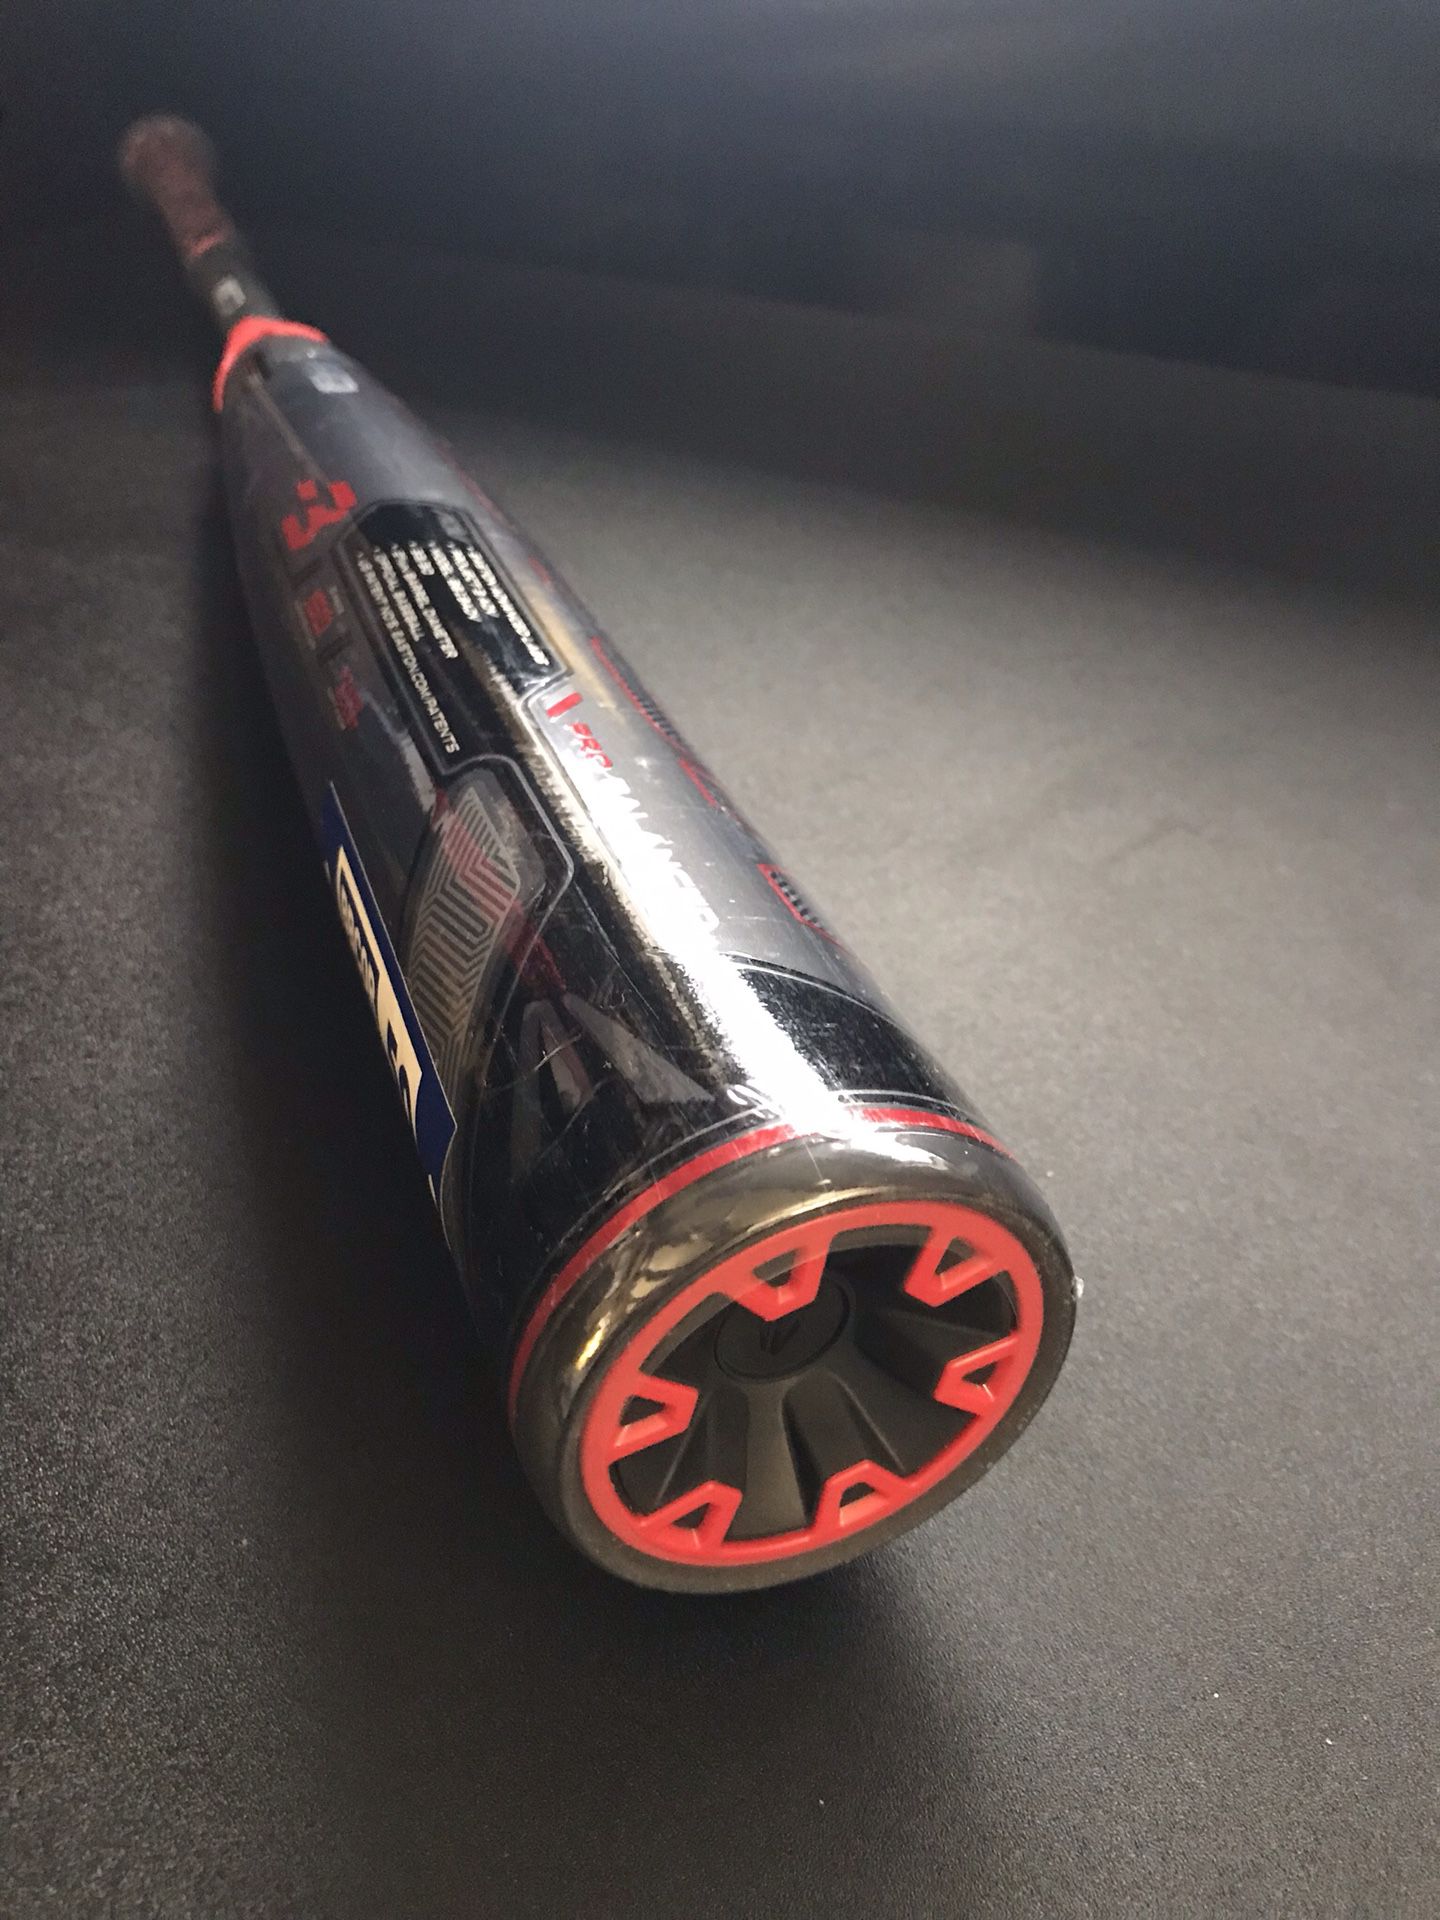 NEW 2019 Easton BB19ADV Project 3 ADV BBCOR Baseball Bat